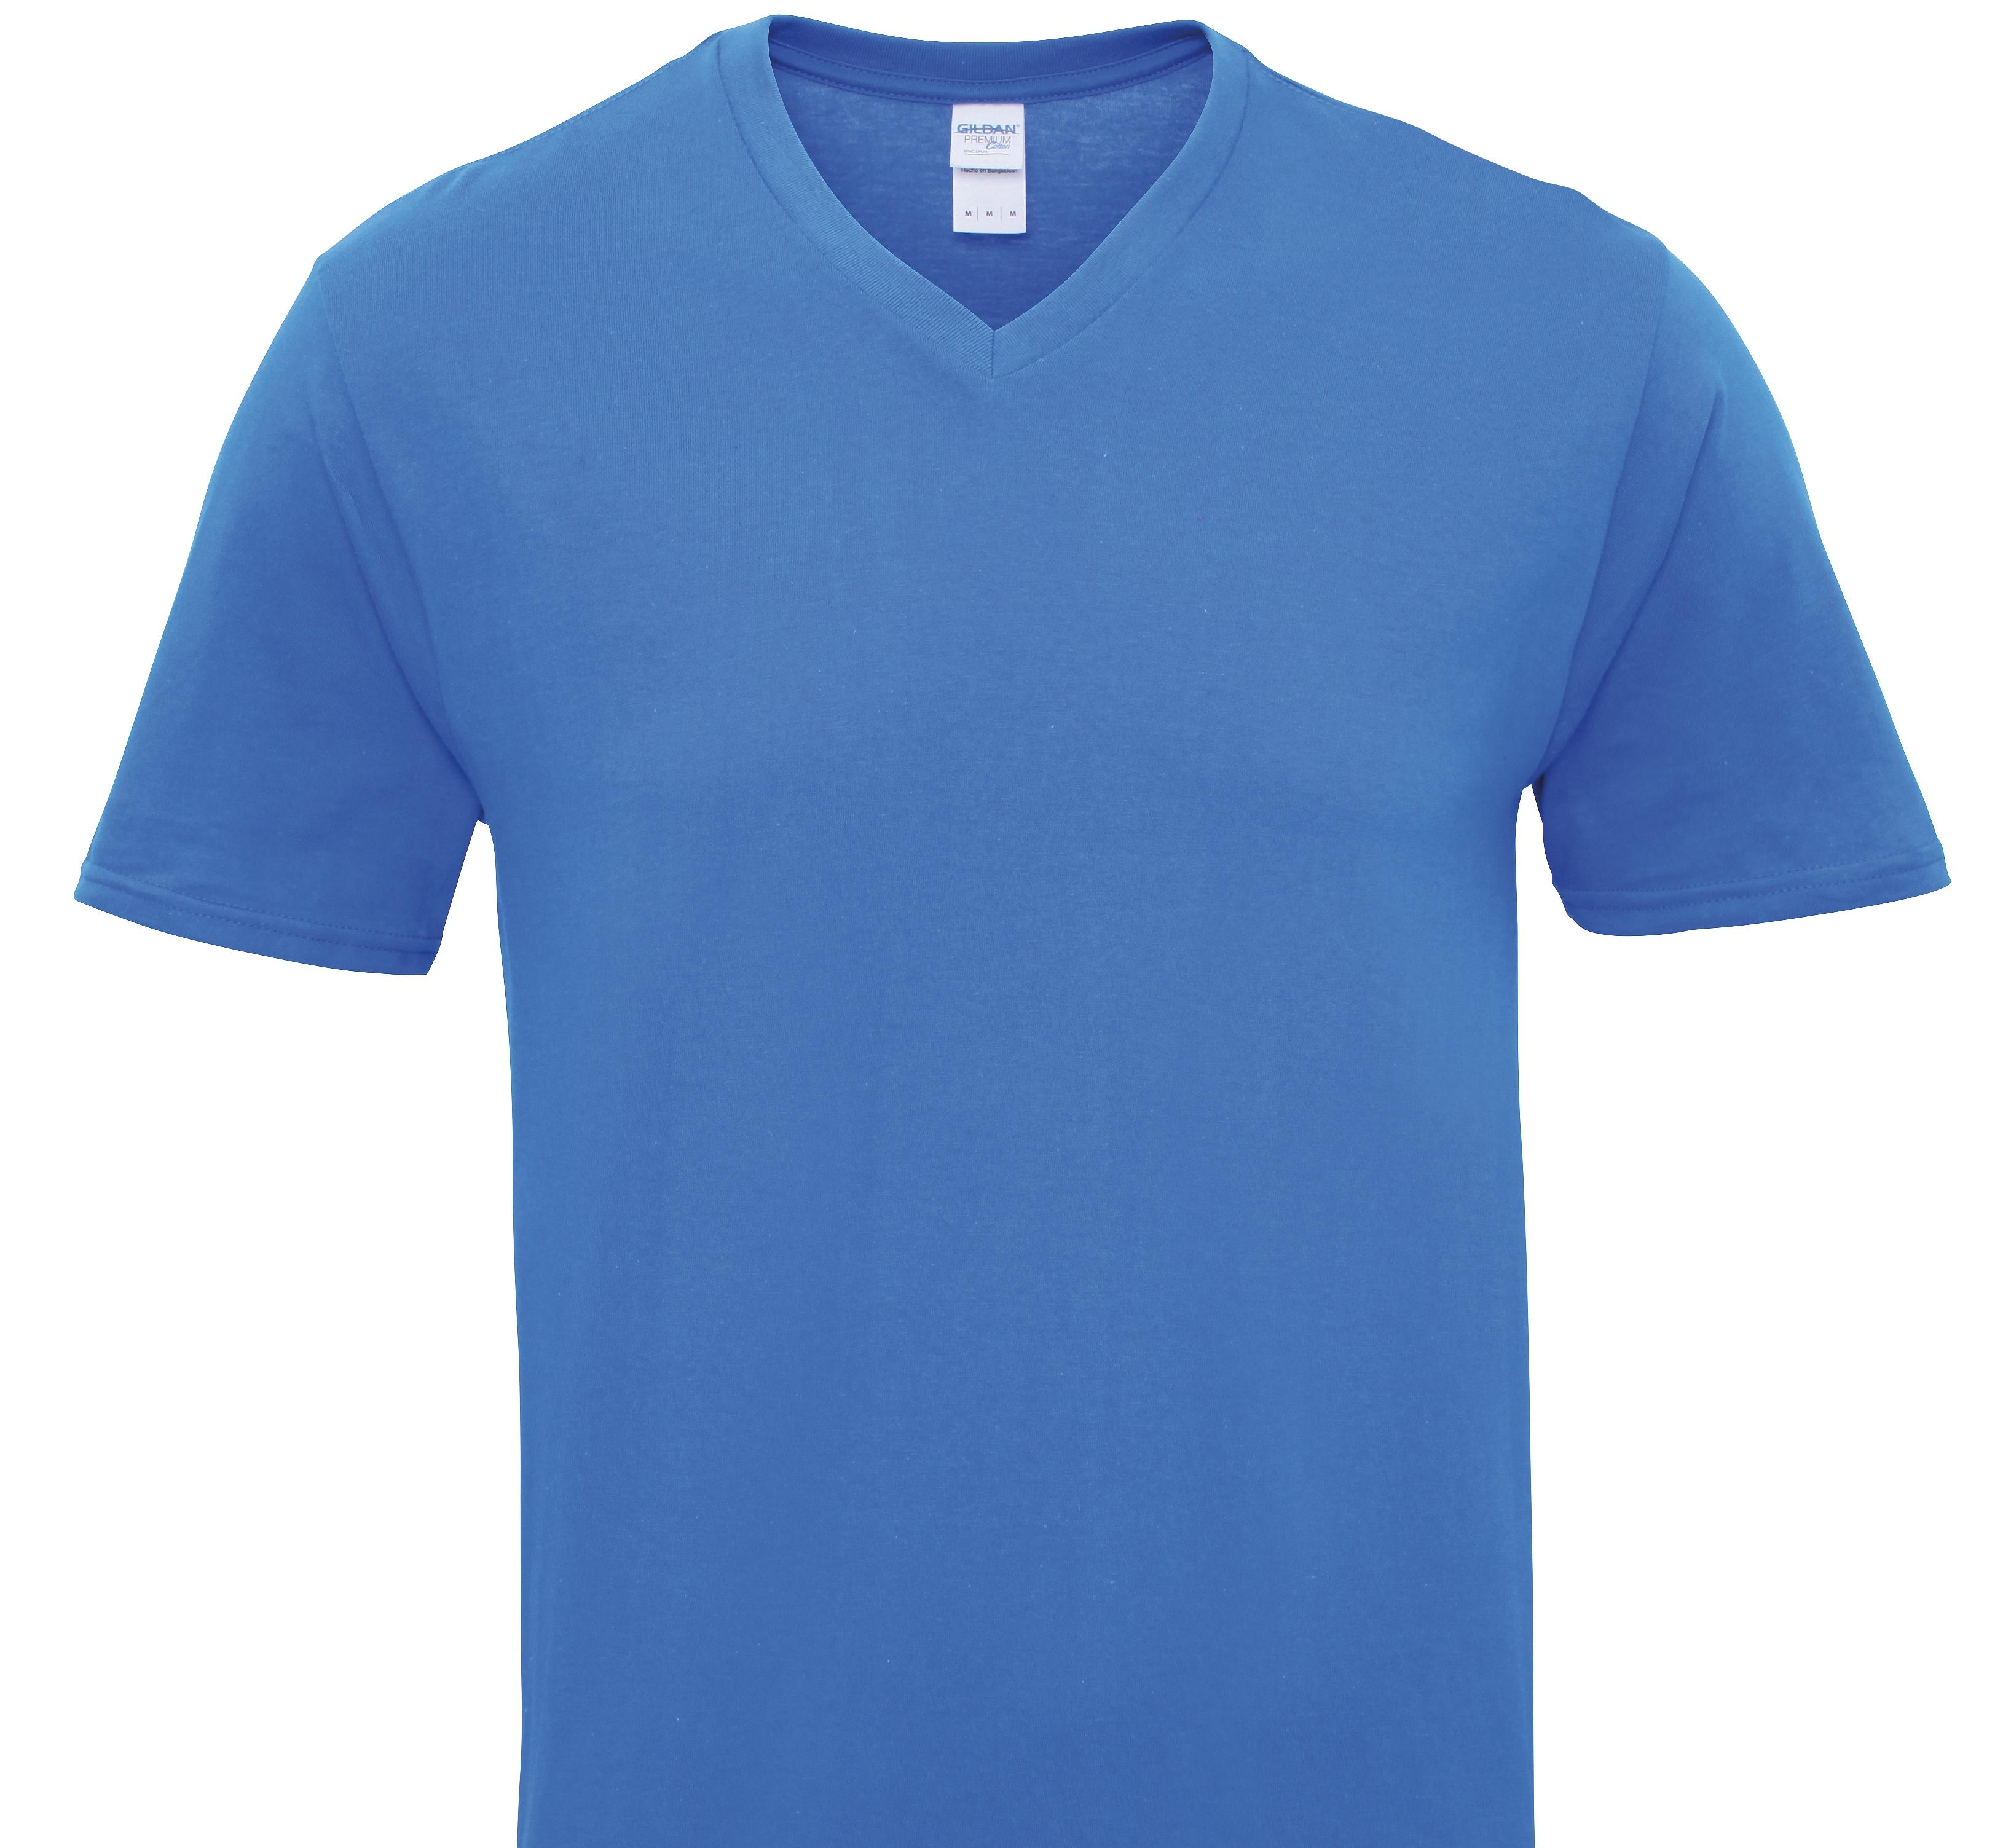 Corgi Pembroke (Outline) T-Shirt Women's V Neck Premium Cotton